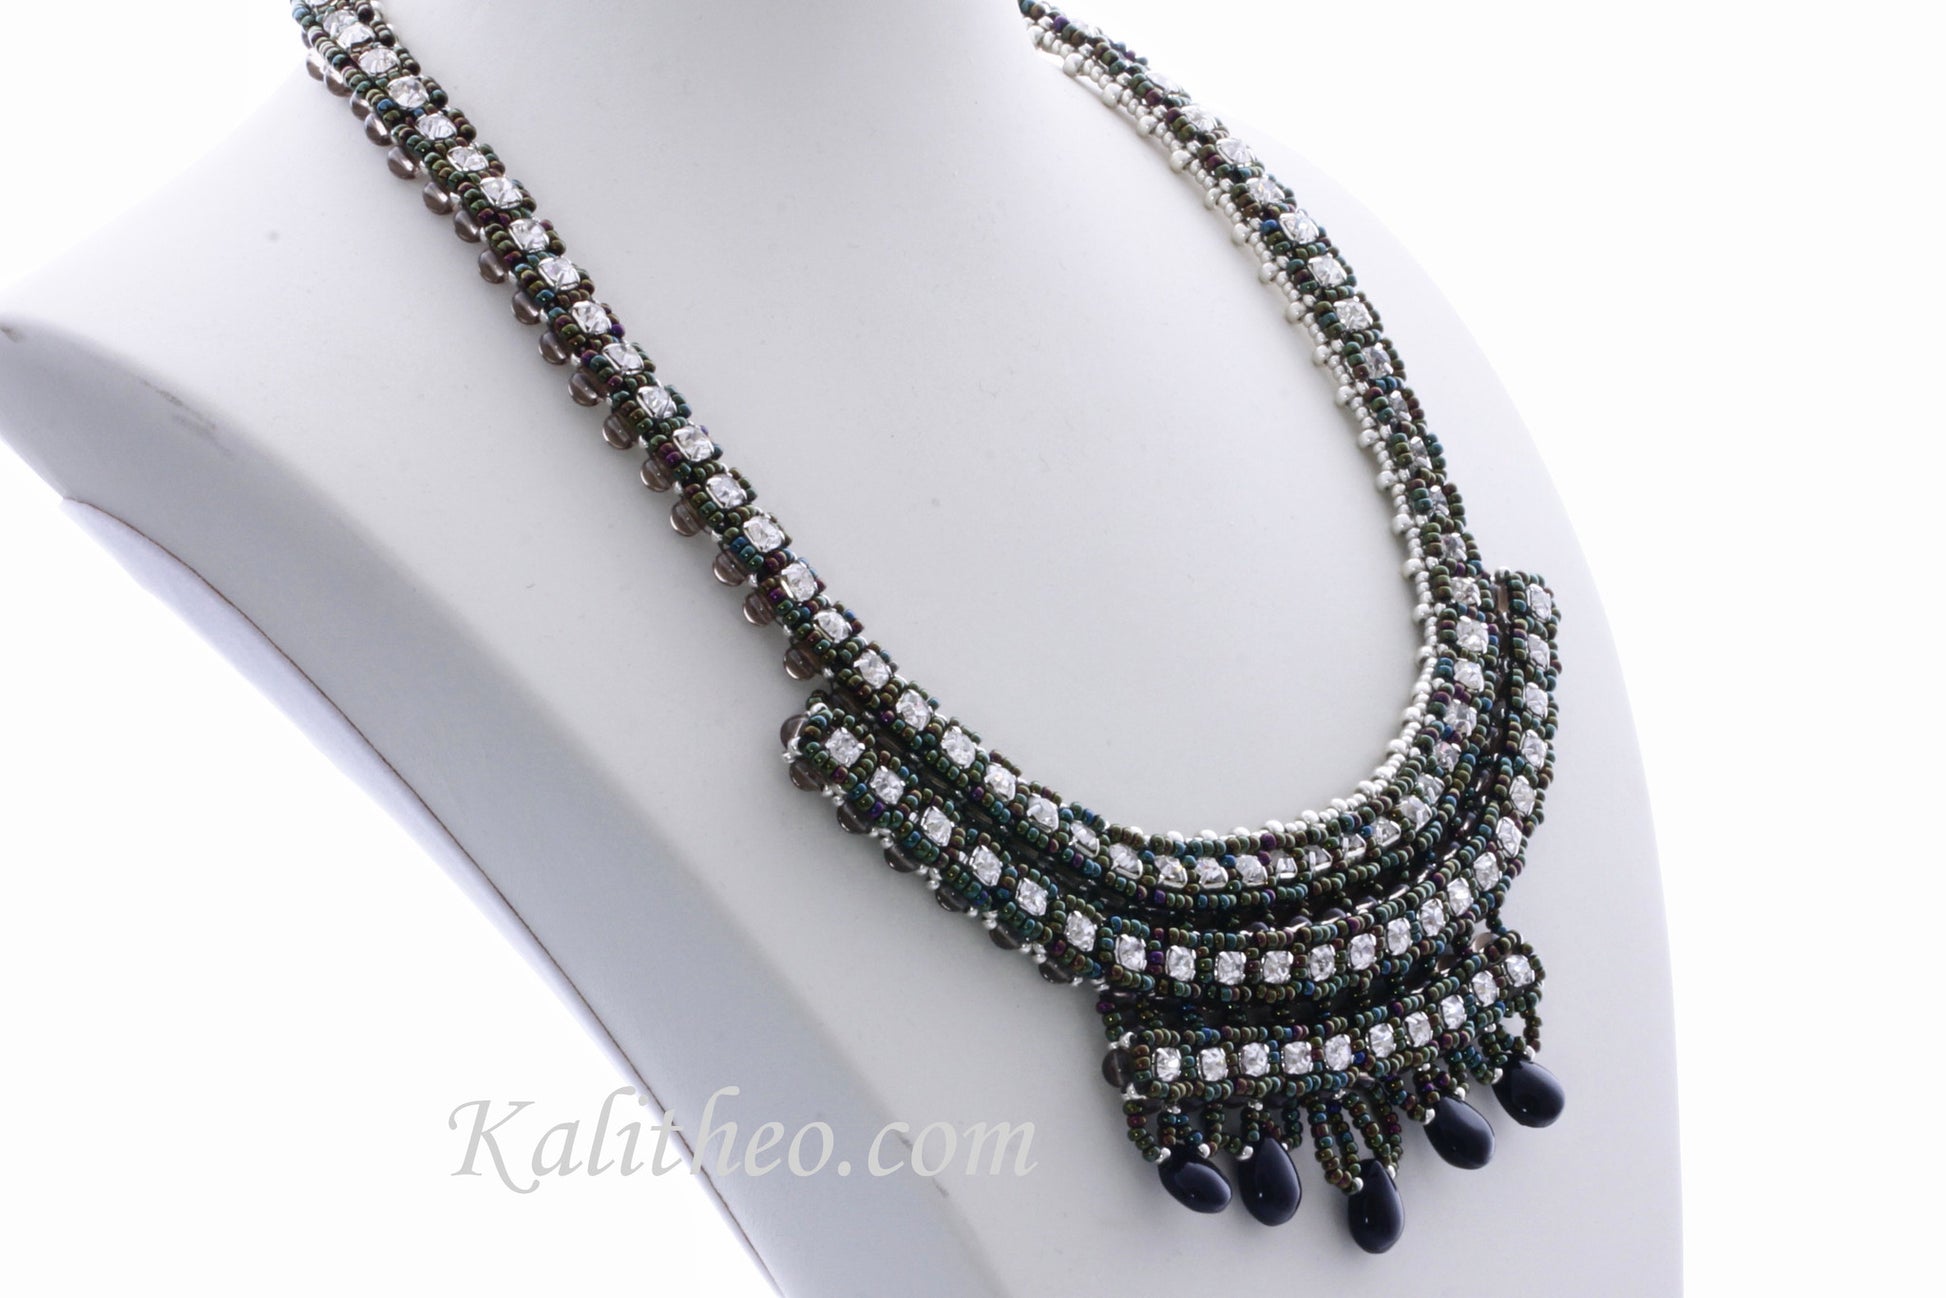 KTC-274 "Savannah" Necklace - Kalitheo Jewellery